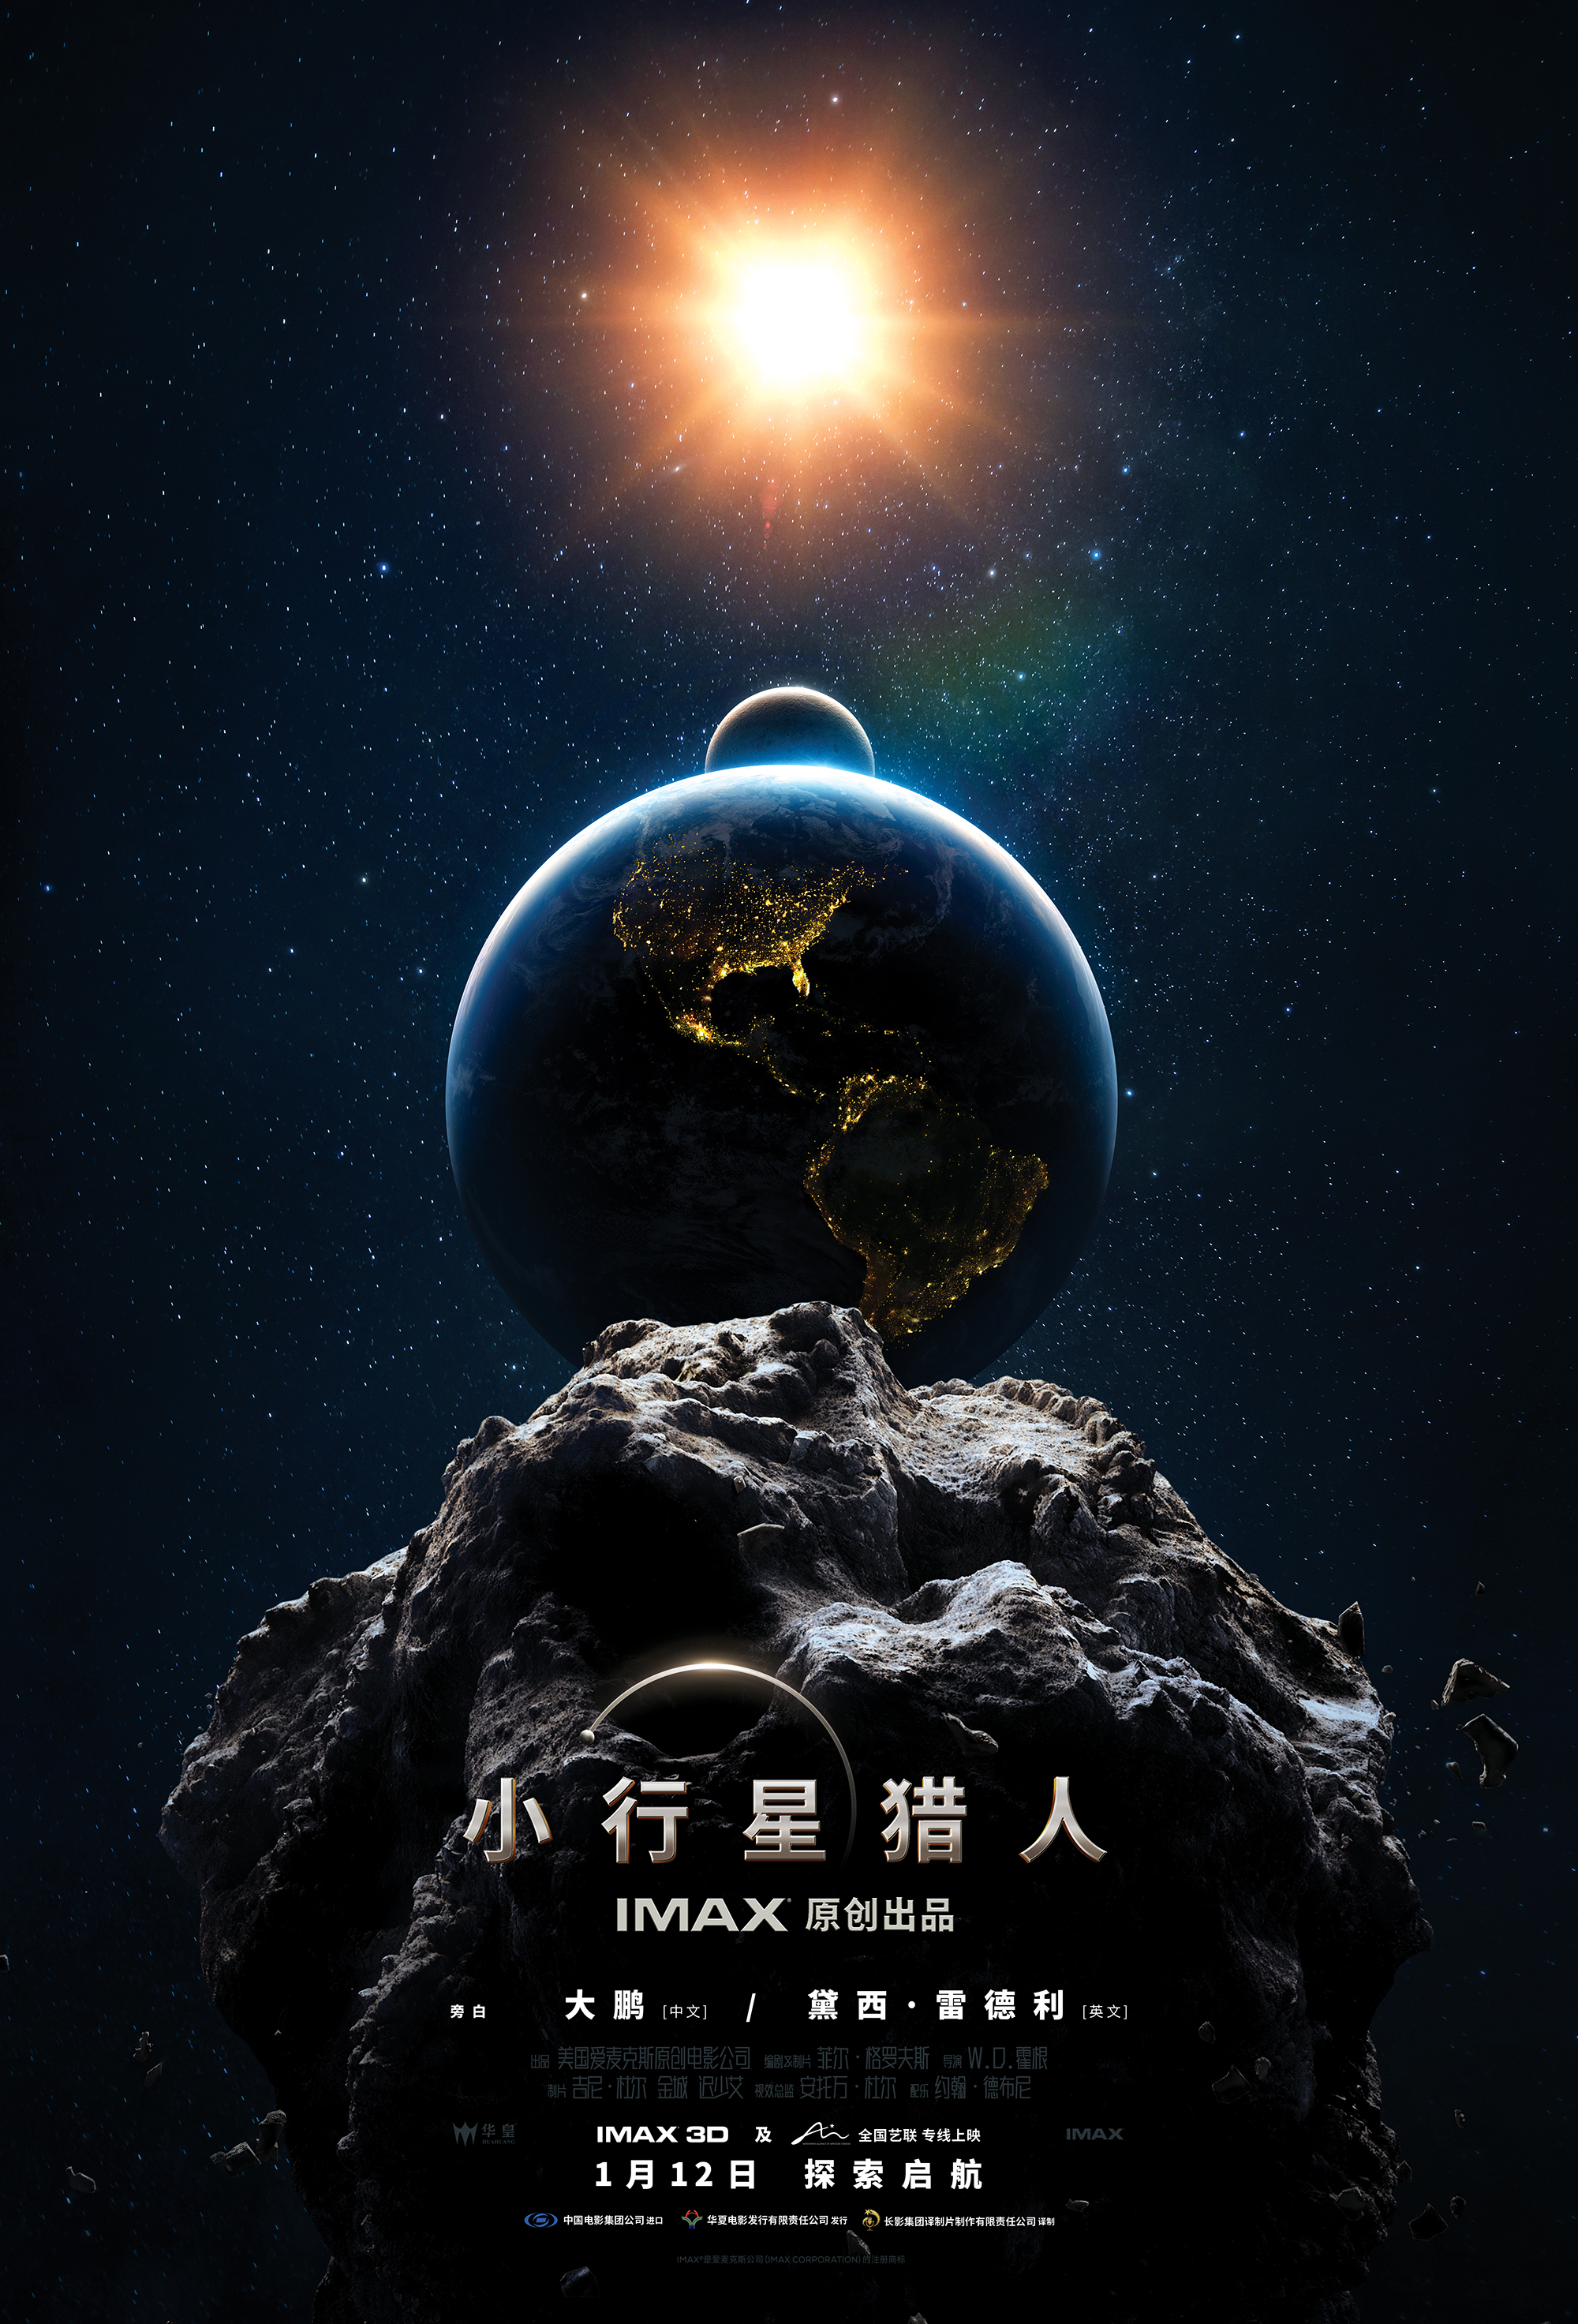 IMAX发布《小行星猎人》主创特辑 IMAX原创电影震撼呈现科学奇观   